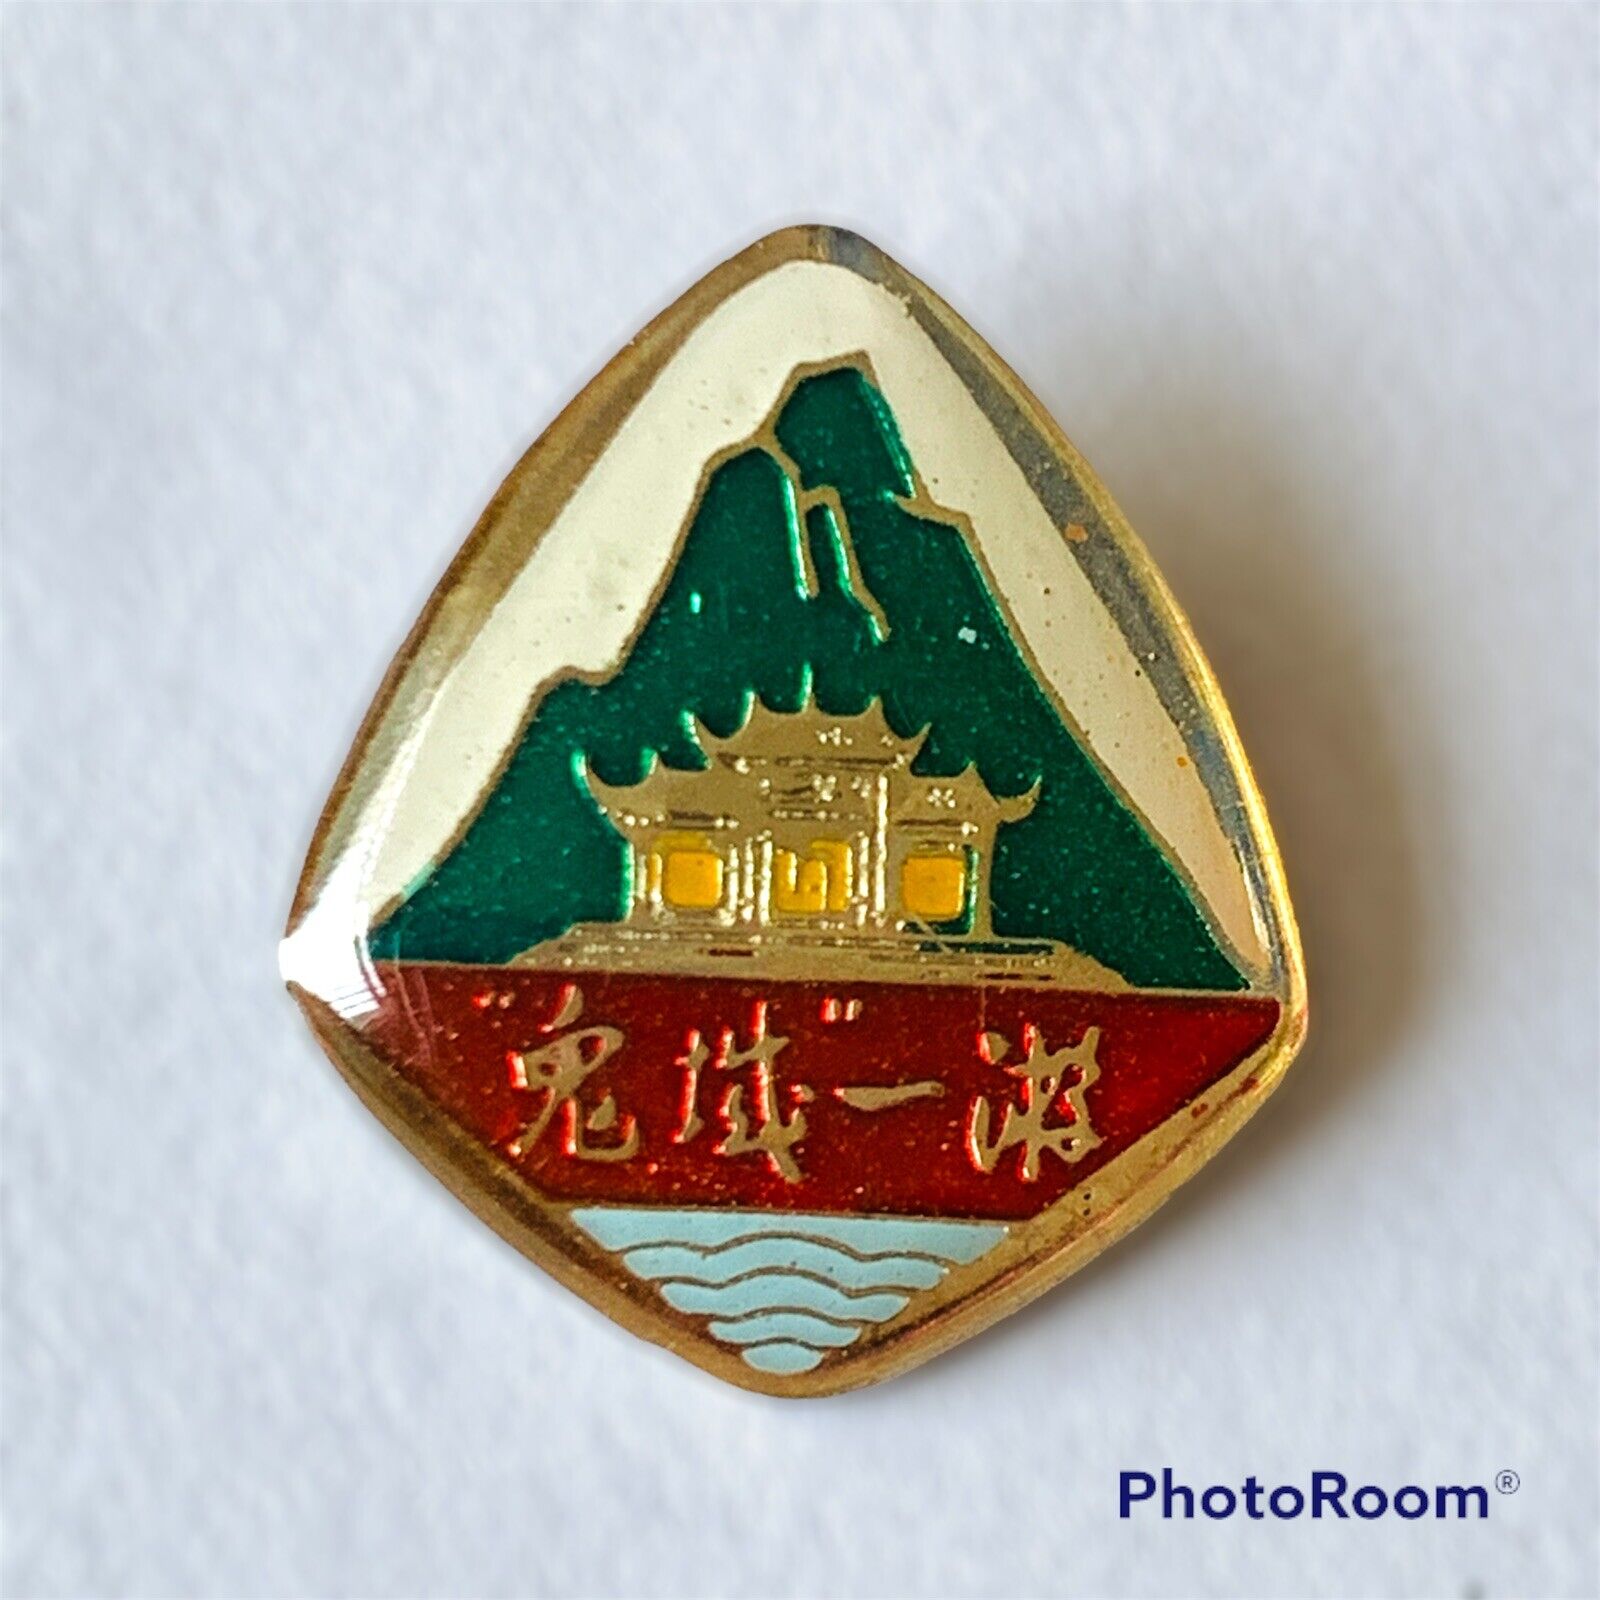 Tiny Rare Collectors Pin Badge Fengdu Ghost City China 